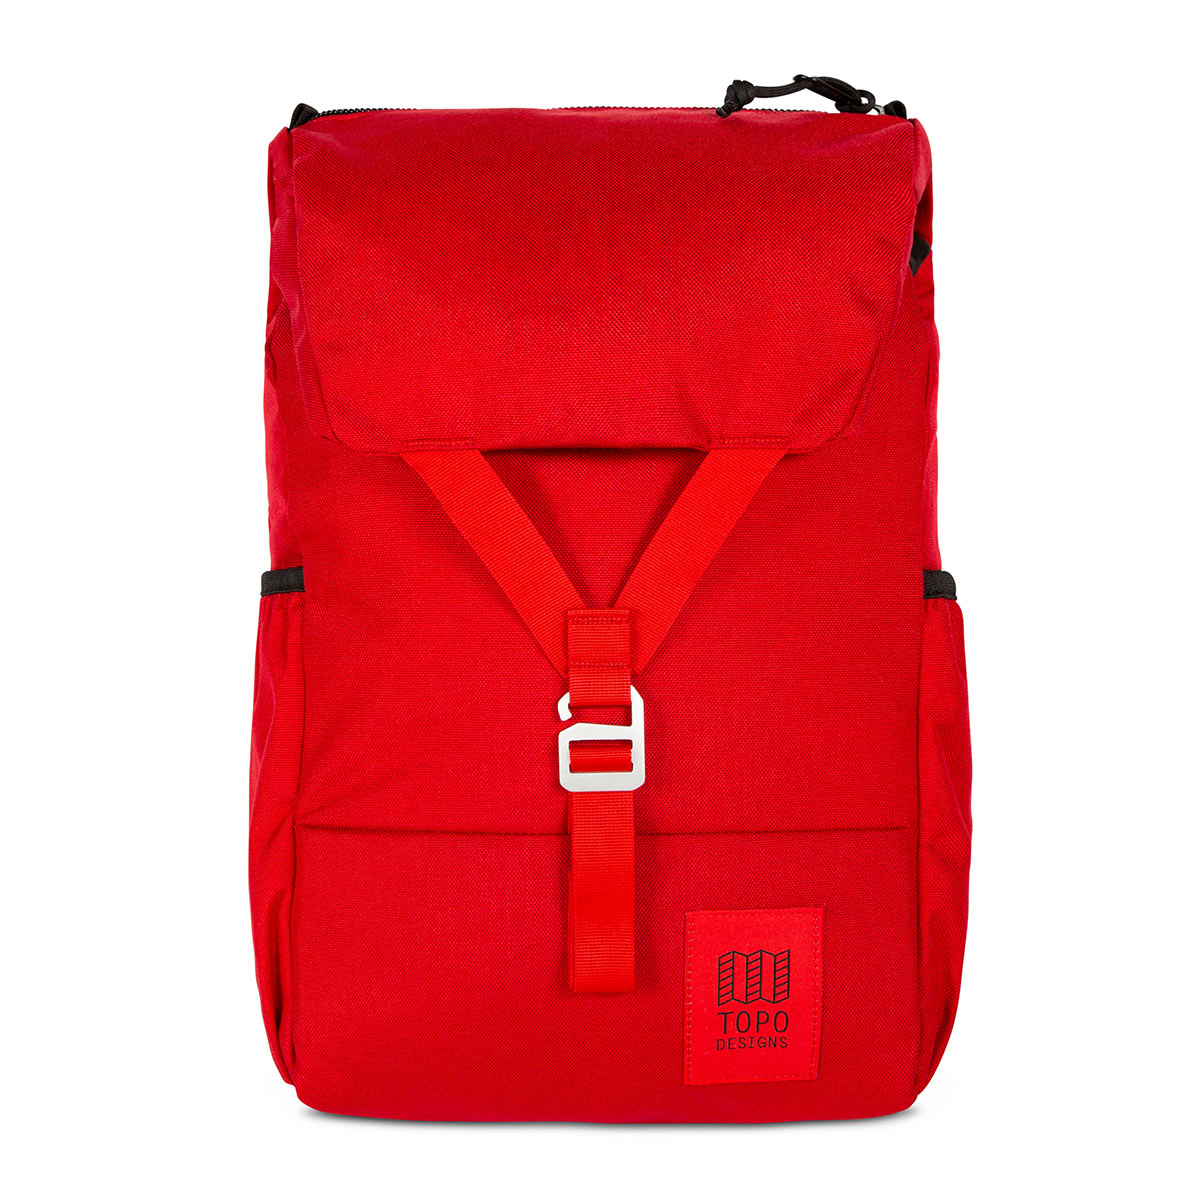 Topo Designs Y-Pack Red fijne dagrugzak met een brede klep en éénpunts sluiting